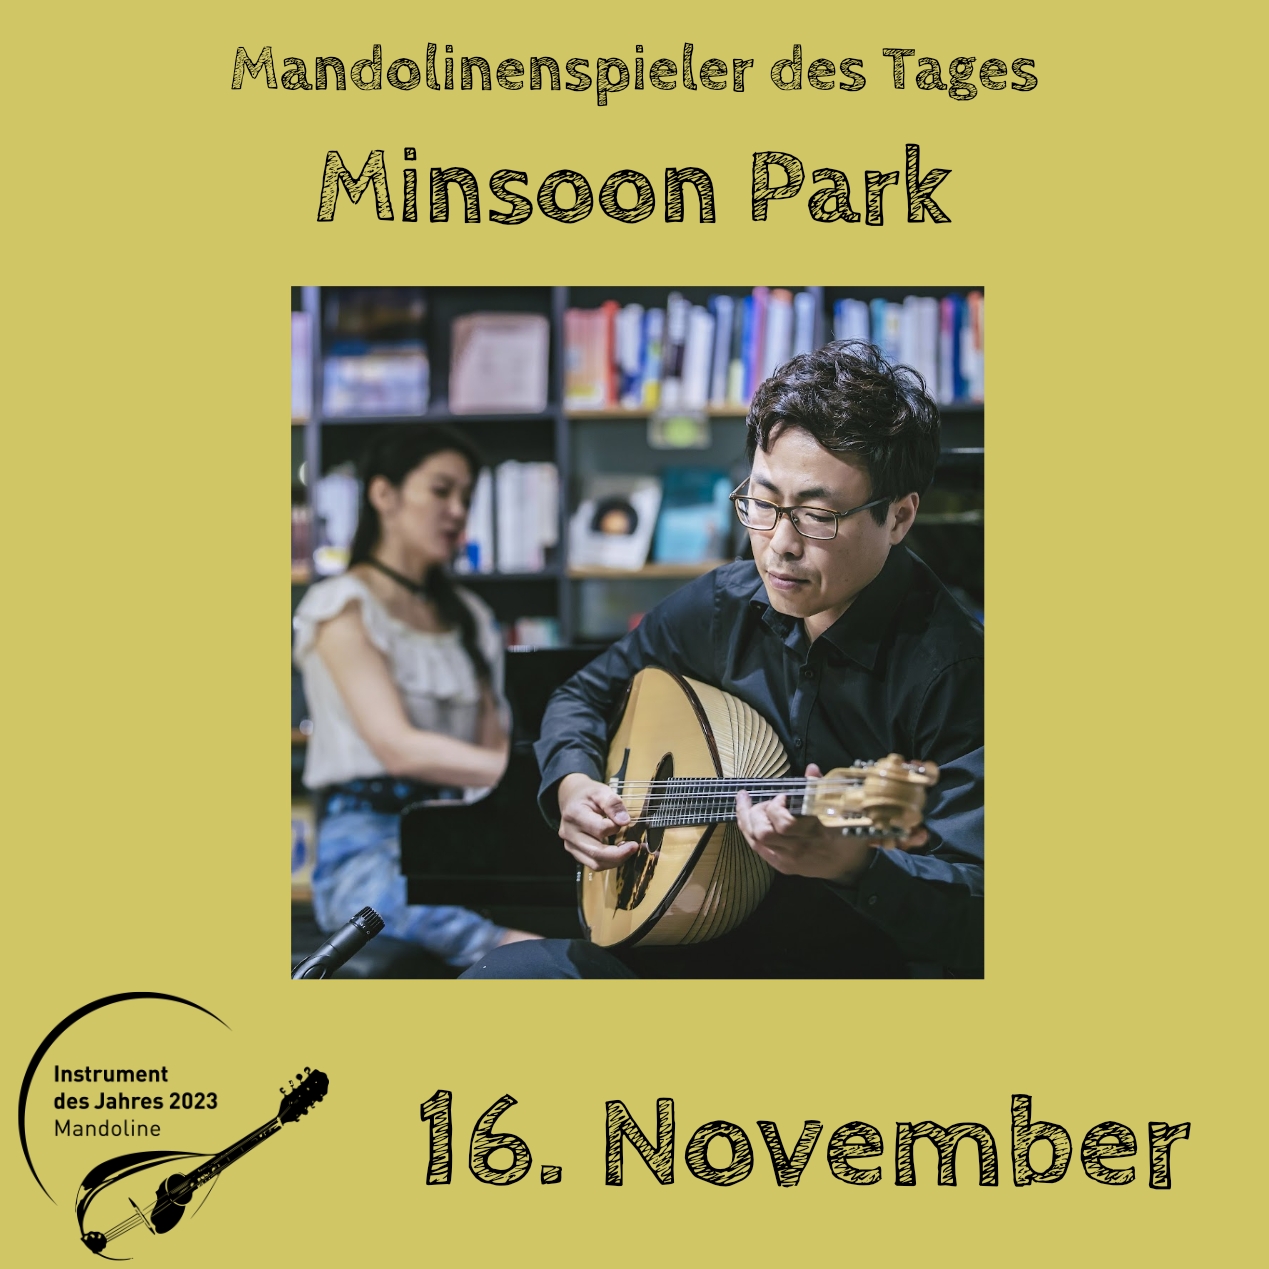 16. November - Minsoon Park Instrument des Jahres 2023 Mandolinenspieler Mandolinenspielerin des Tages